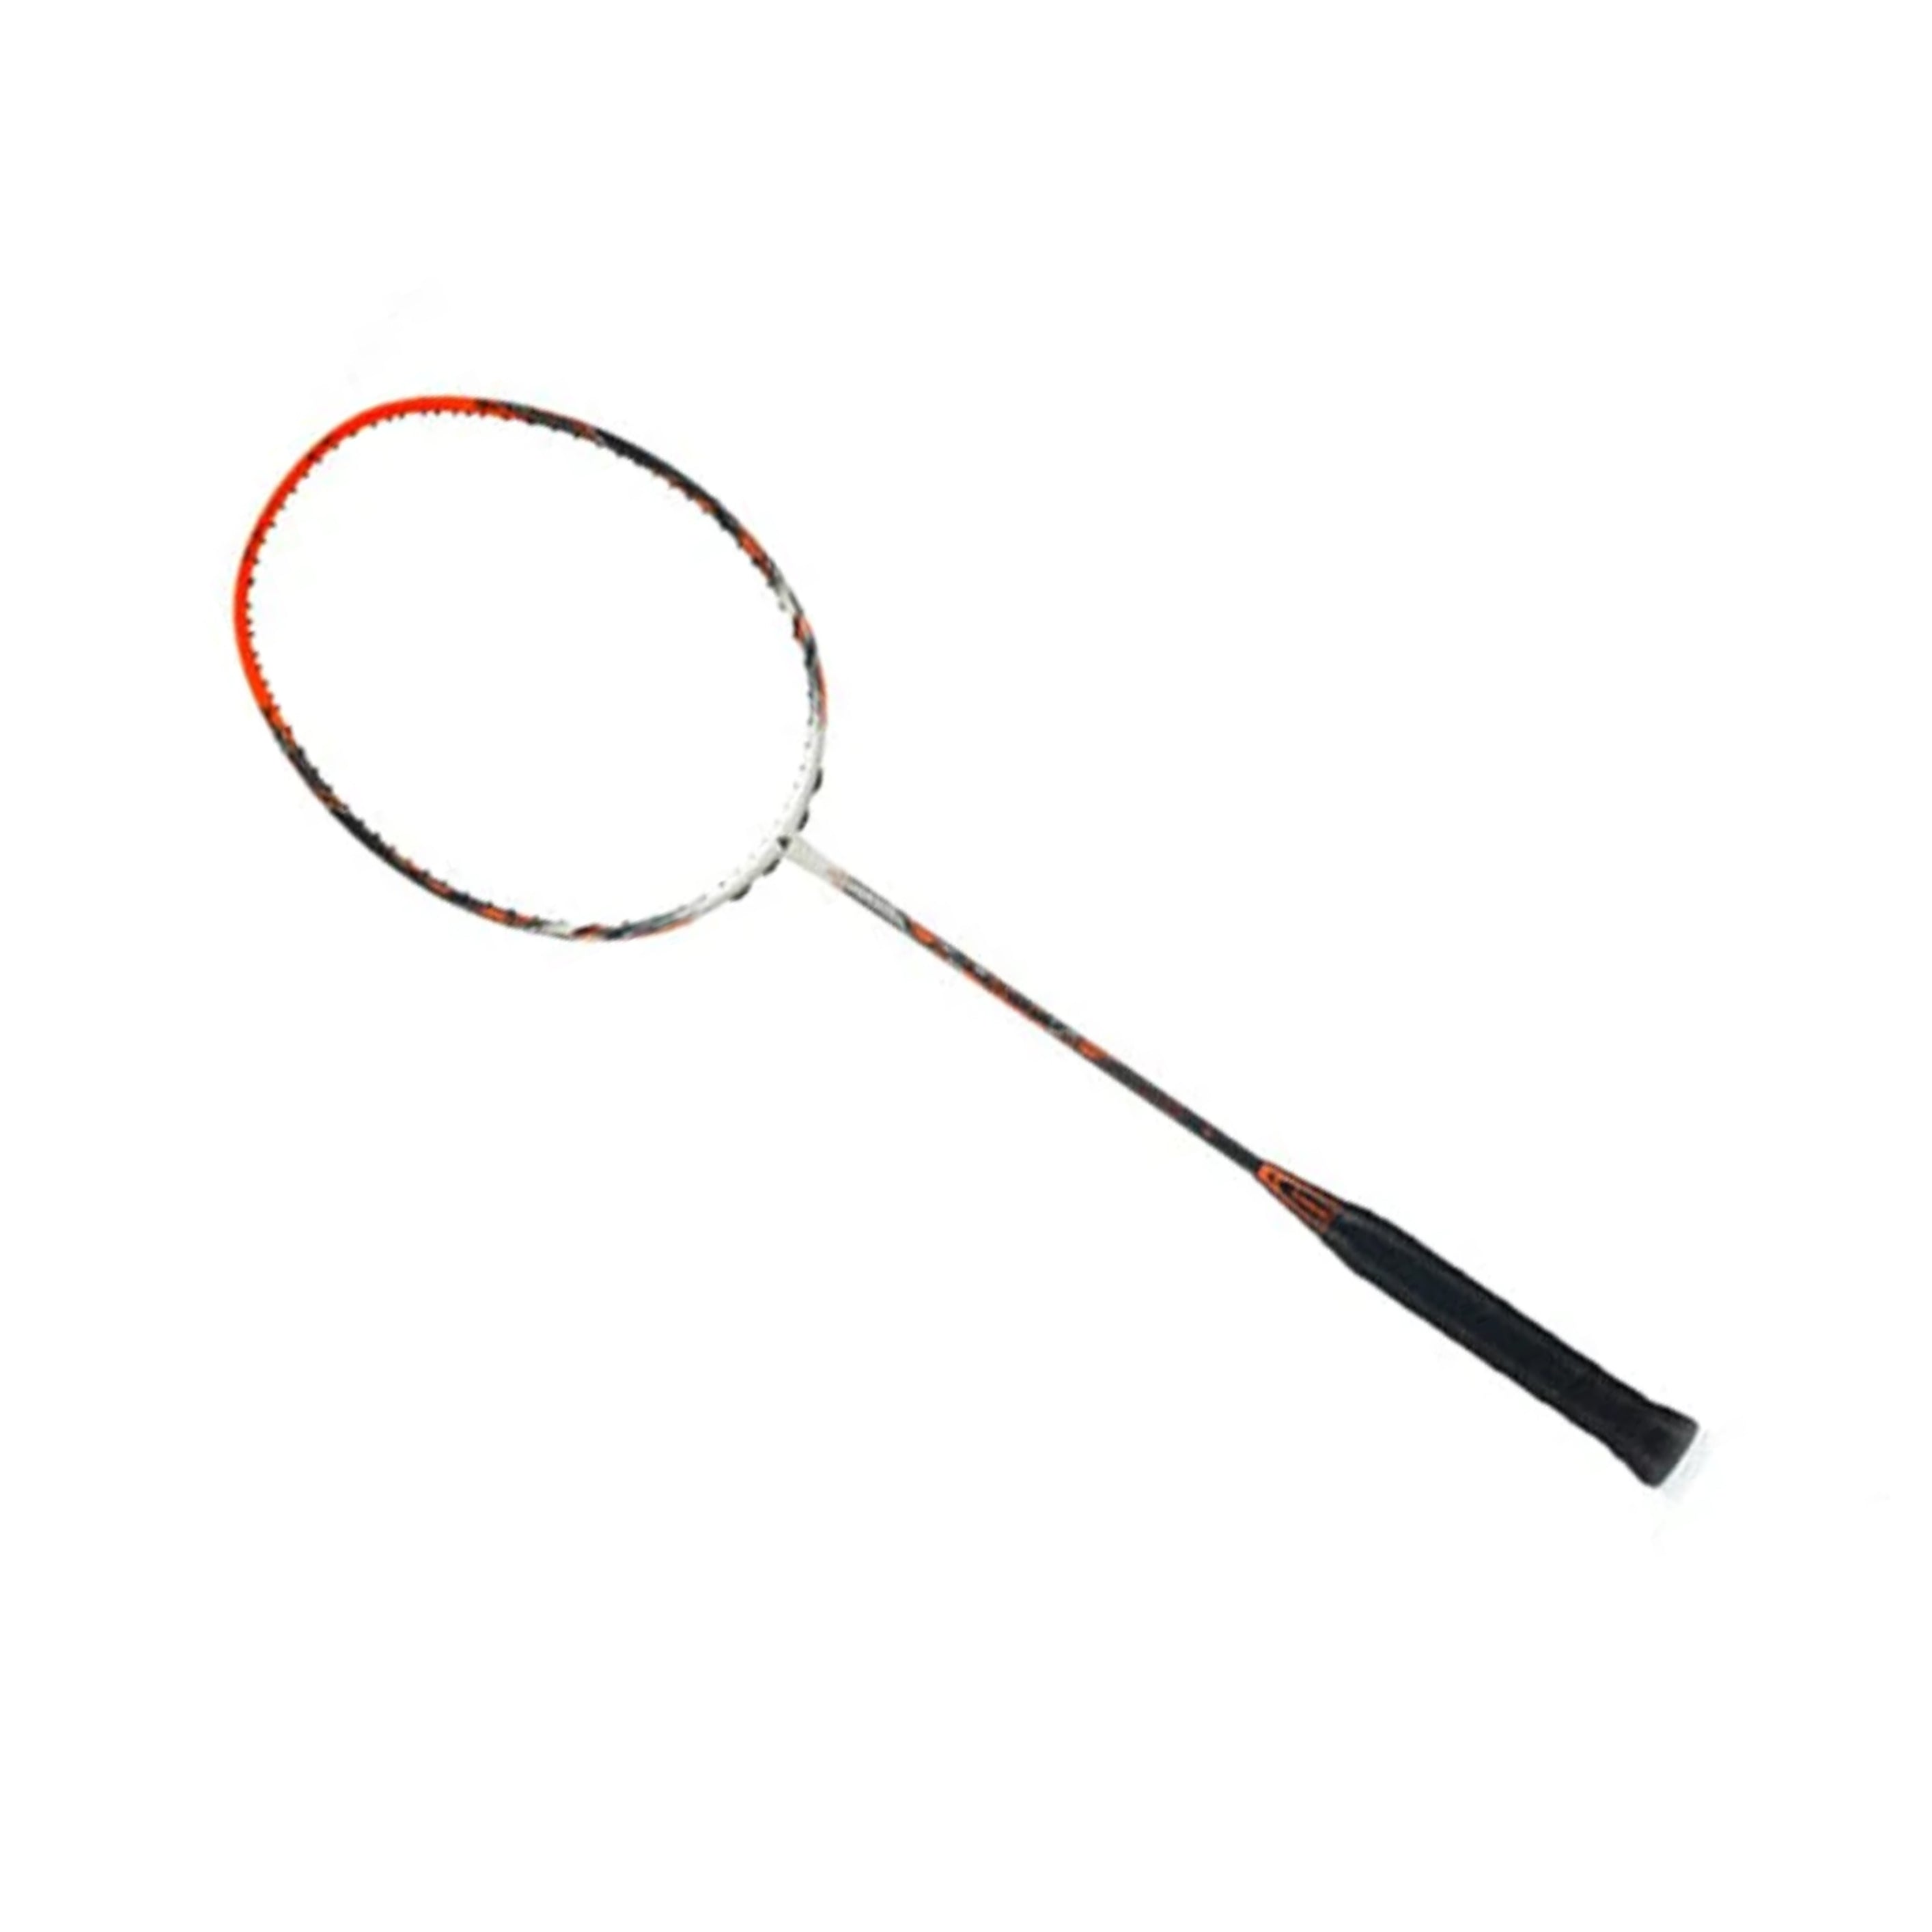 Force F7 Unstrung Badminton Racket (Orange)